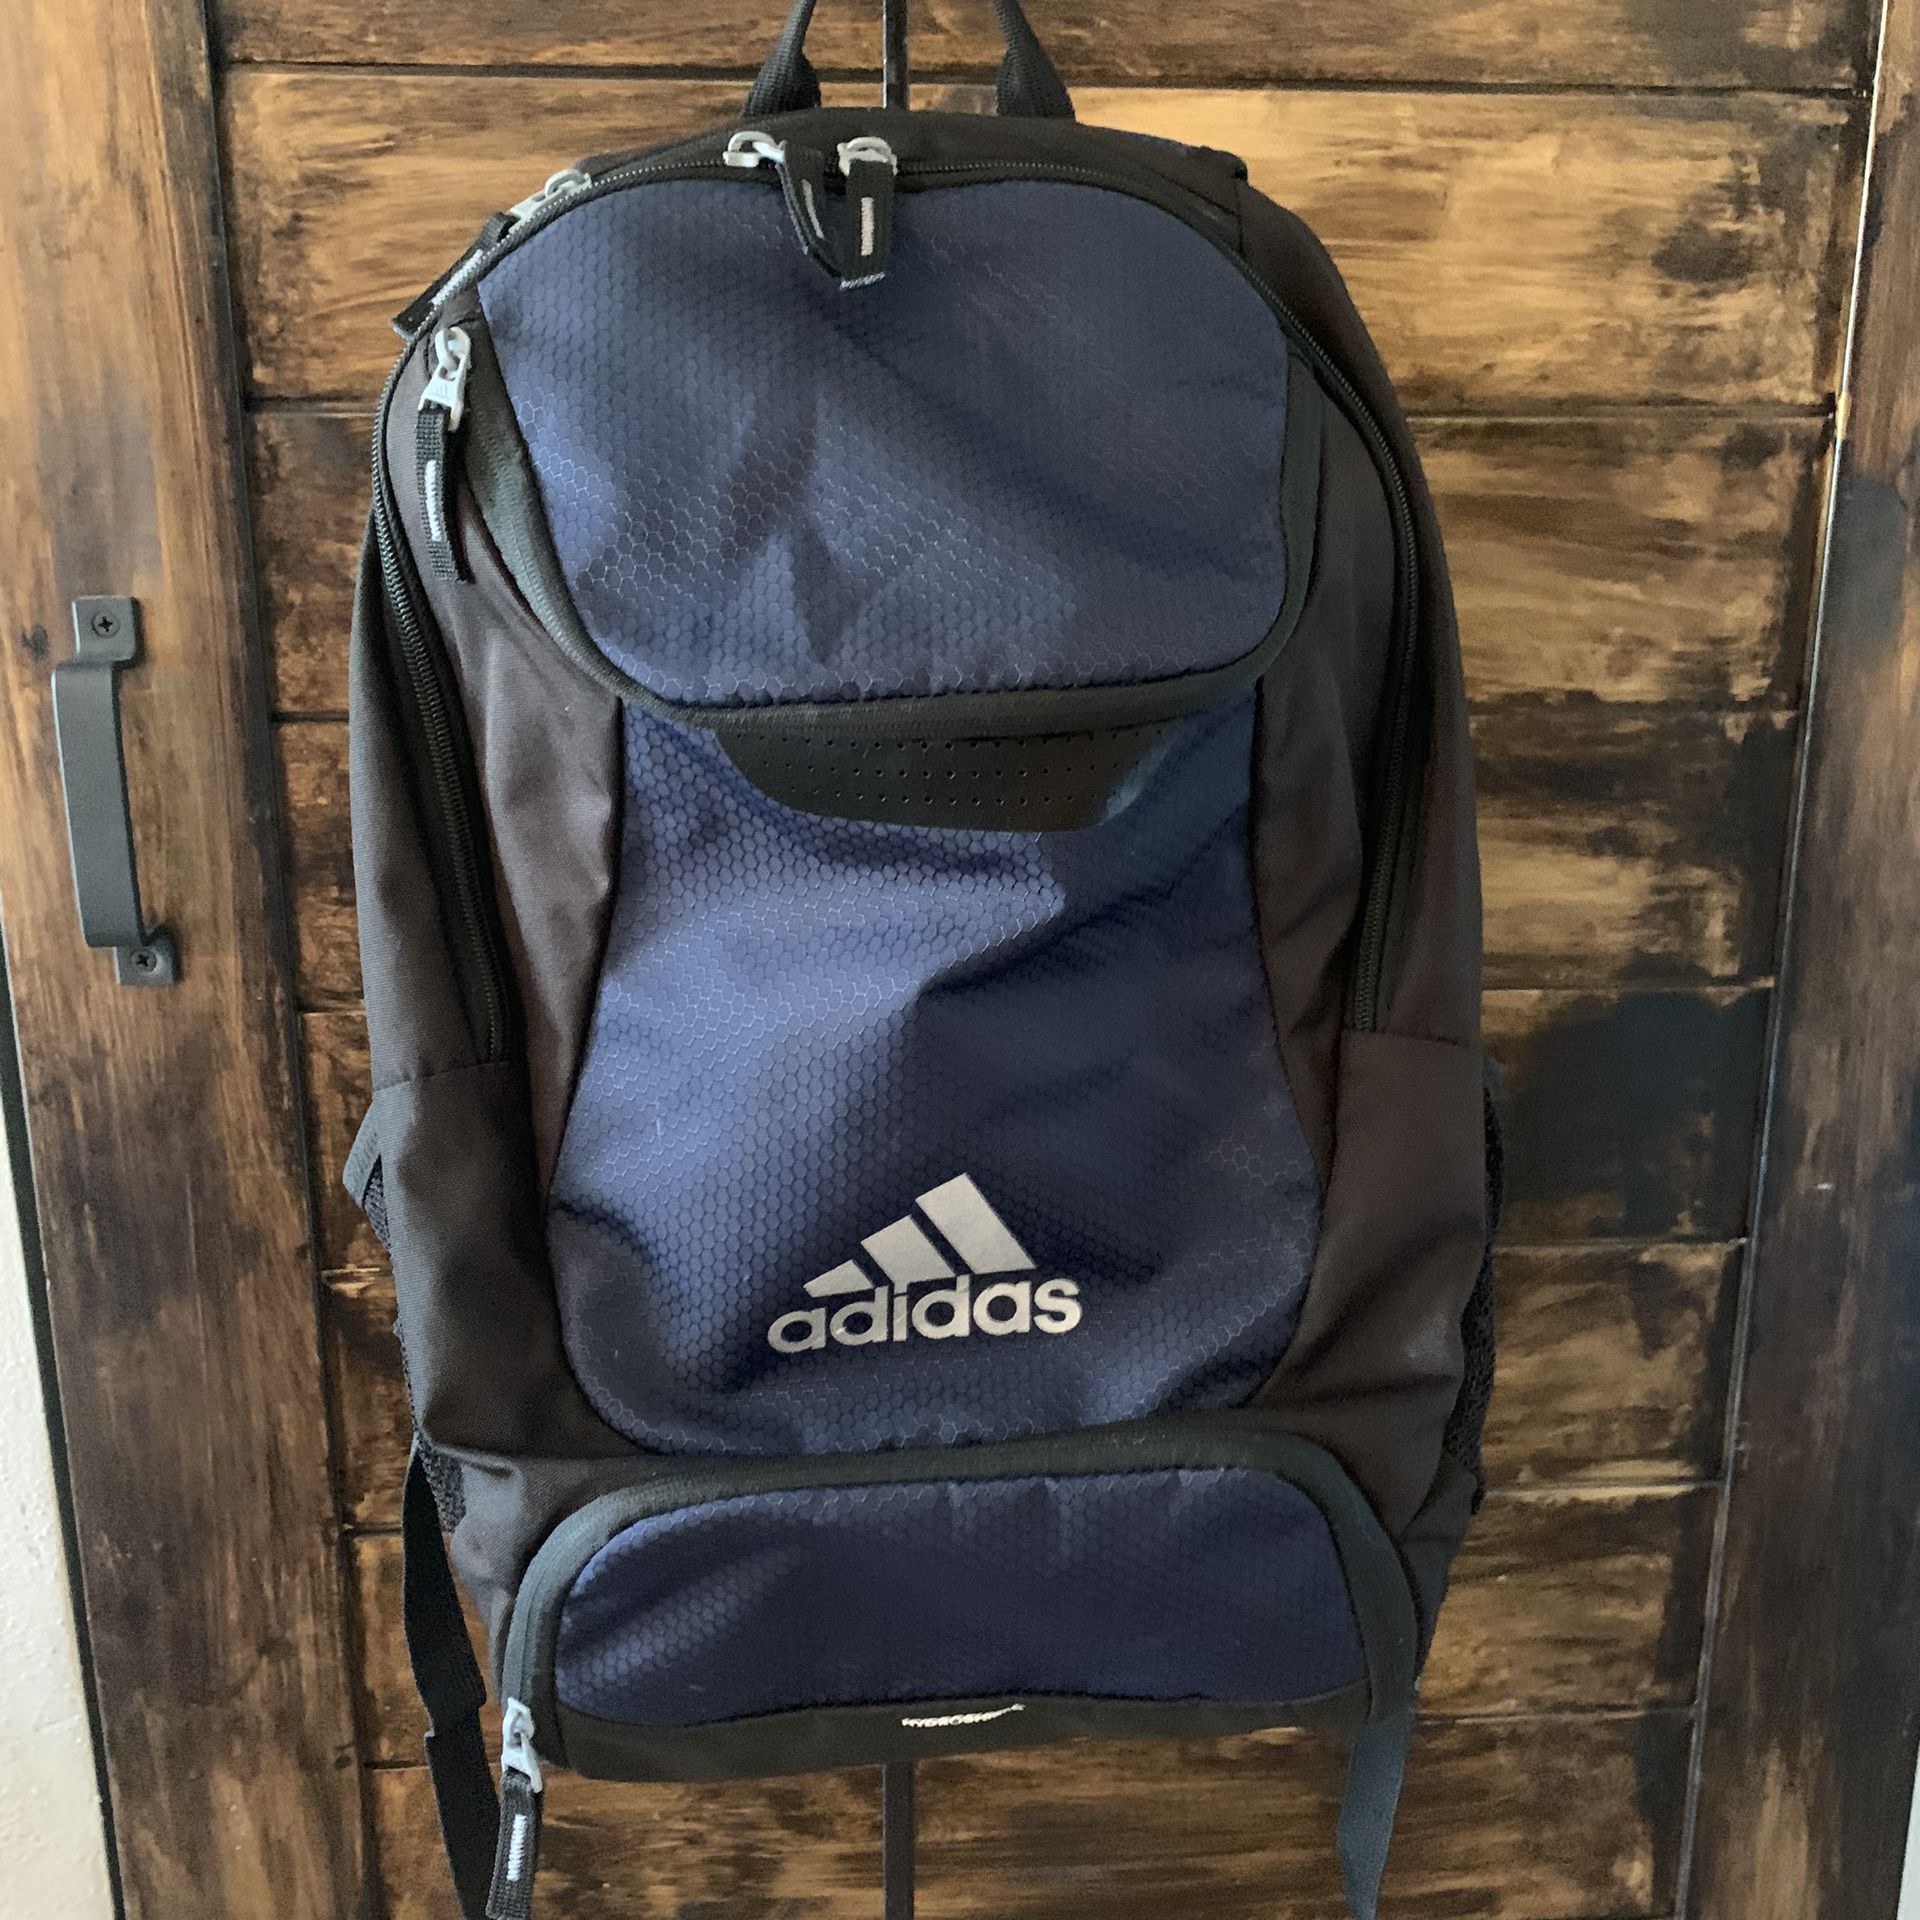 Adidas Soccer Bag